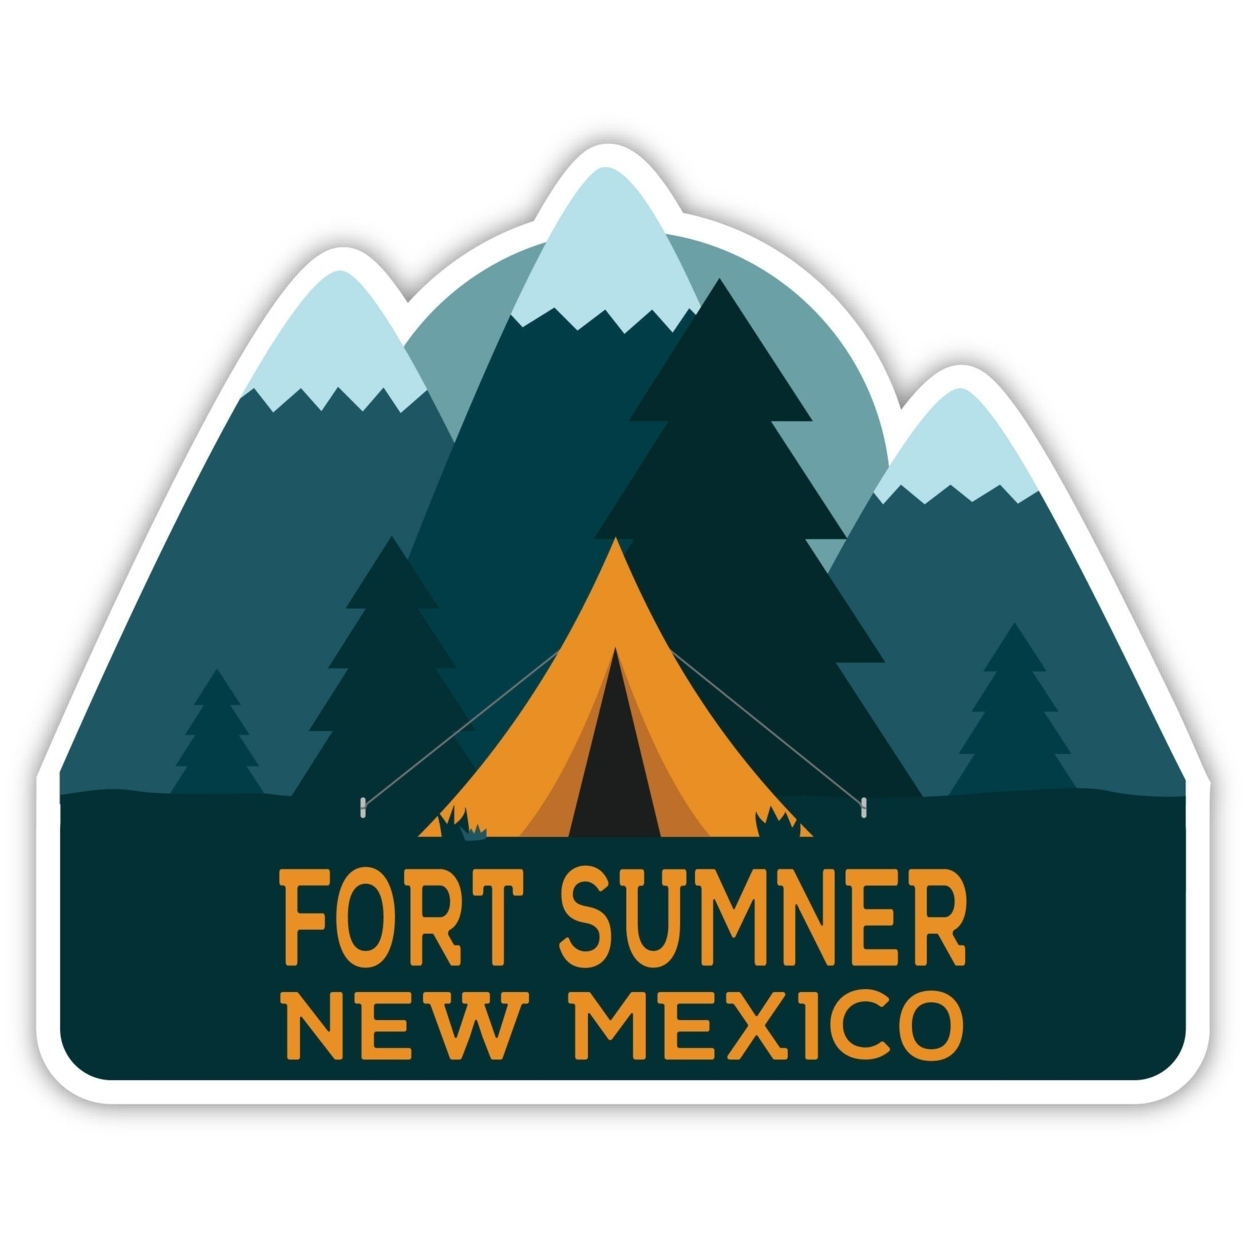 Fort Sumner New Mexico Souvenir Decorative Stickers (Choose Theme And Size) - Single Unit, 2-Inch, Tent